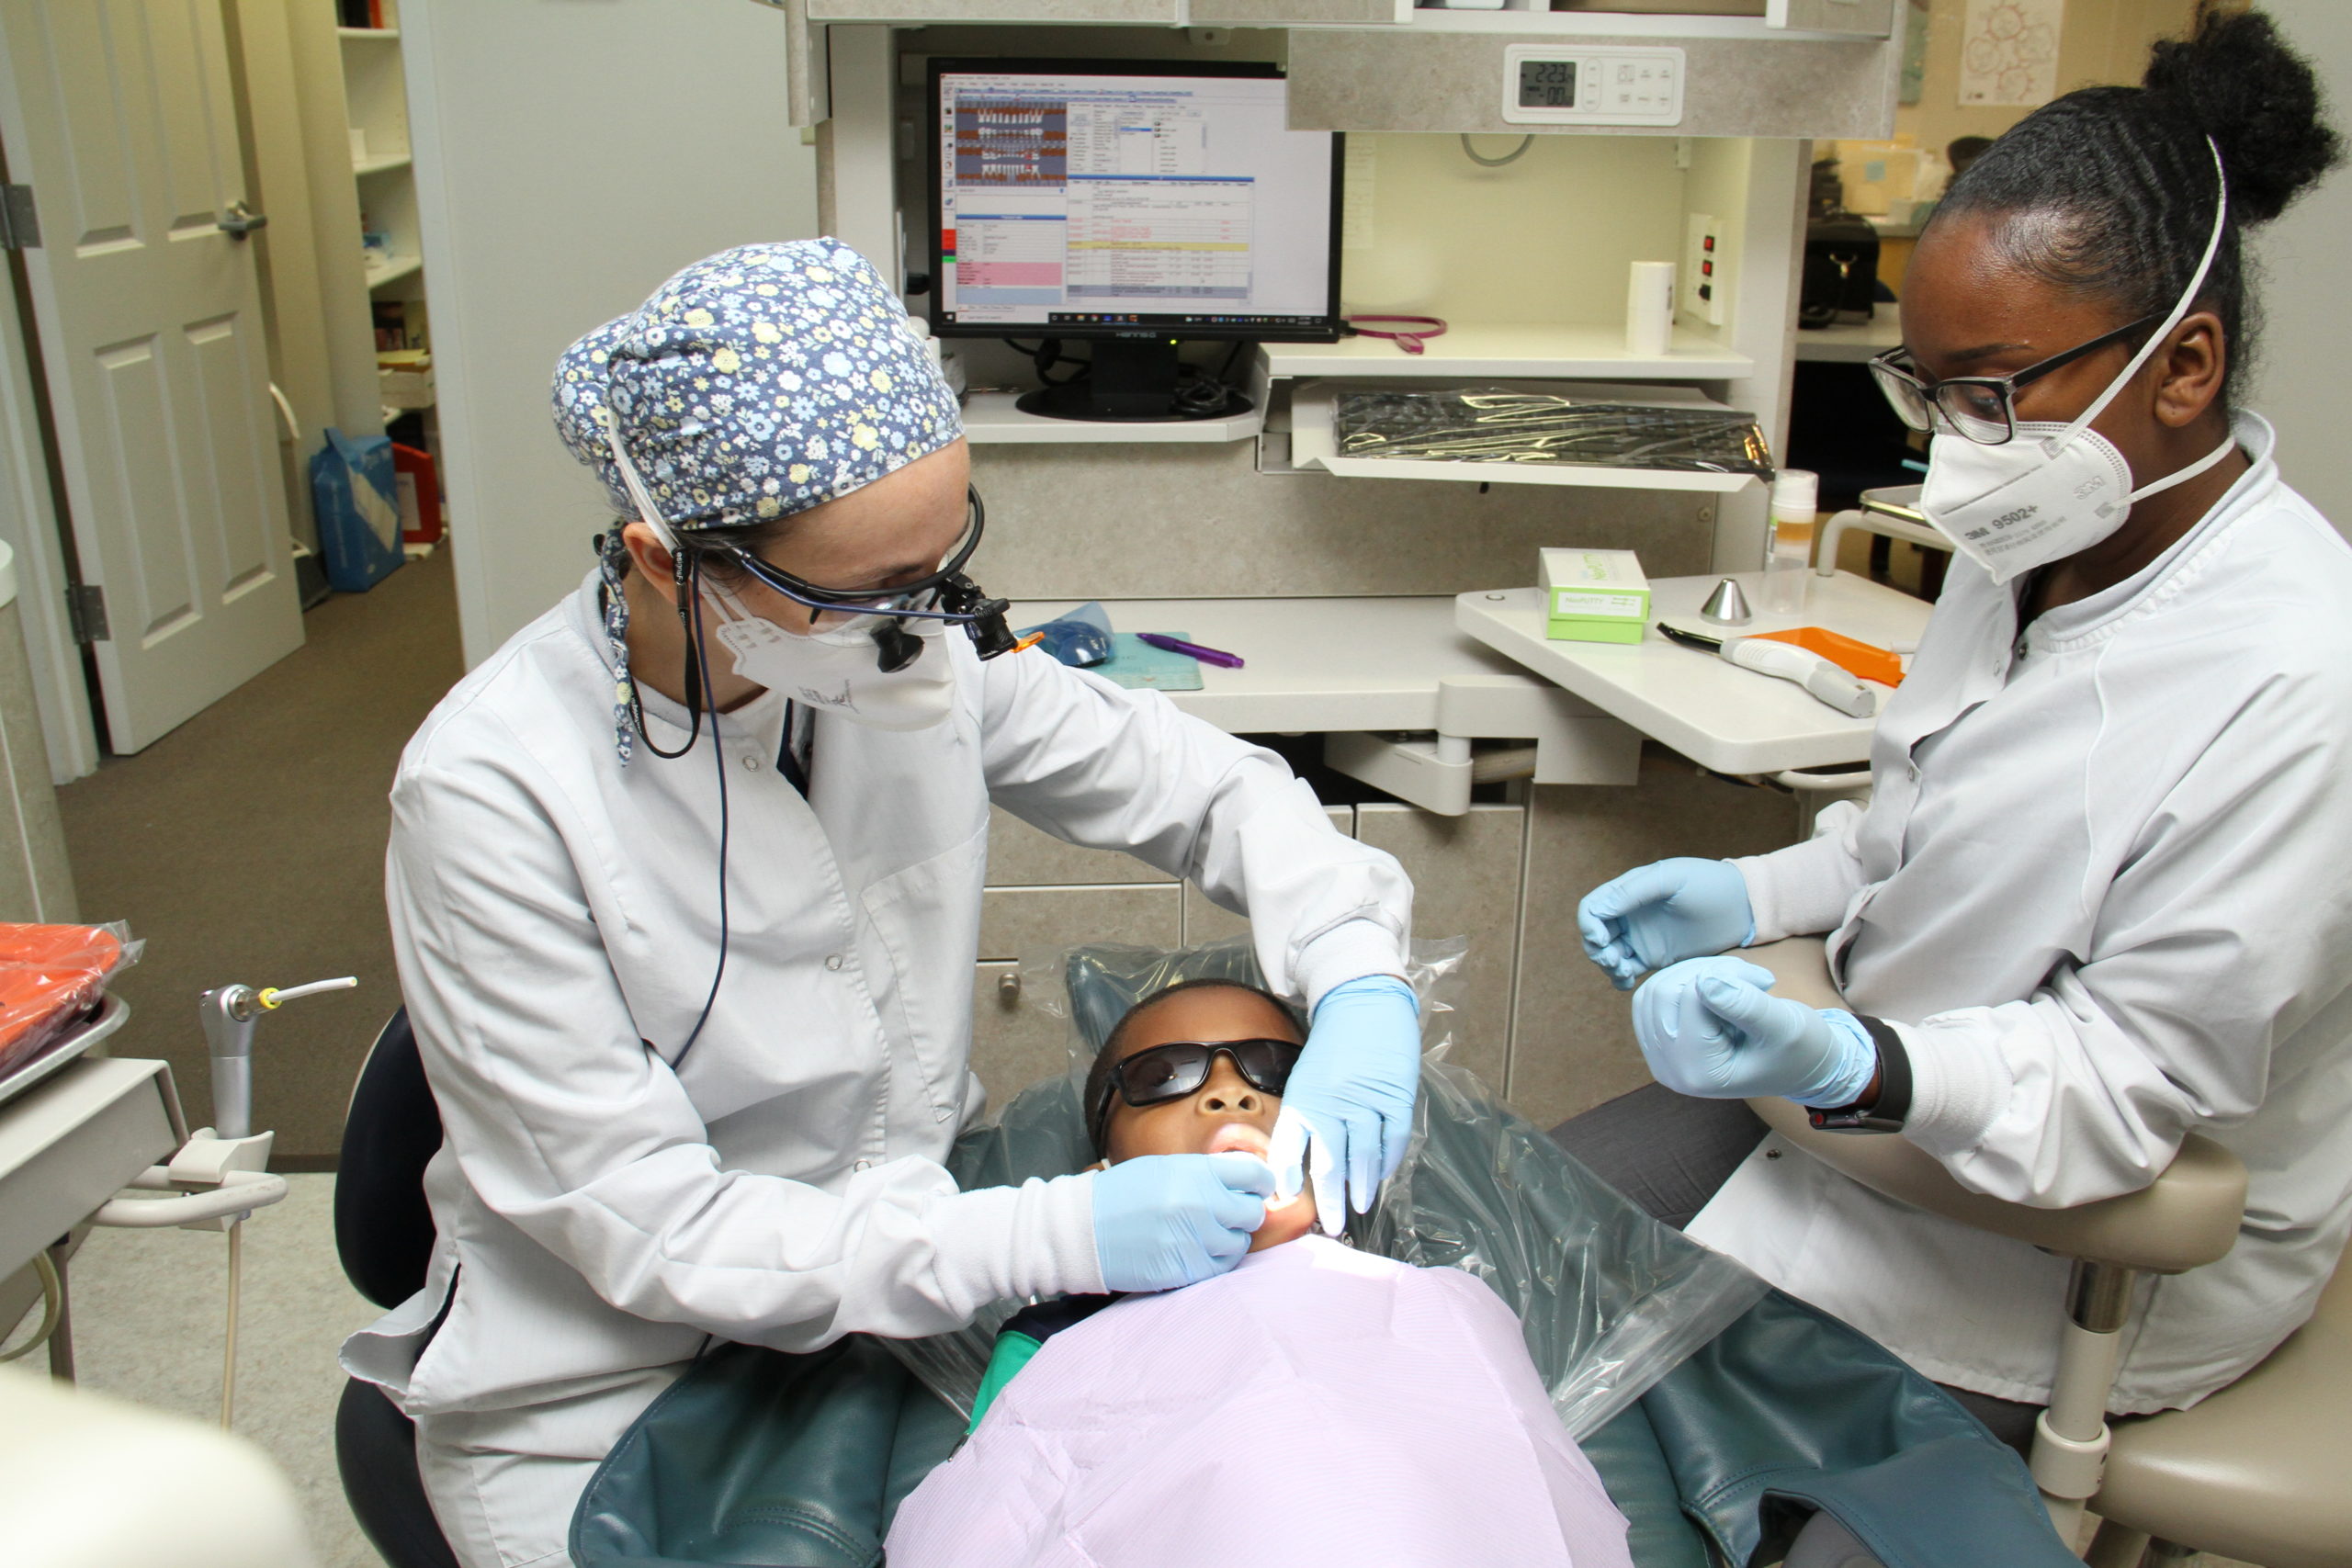 Dr. Goldenhersh treating a child - Family dentist in University City